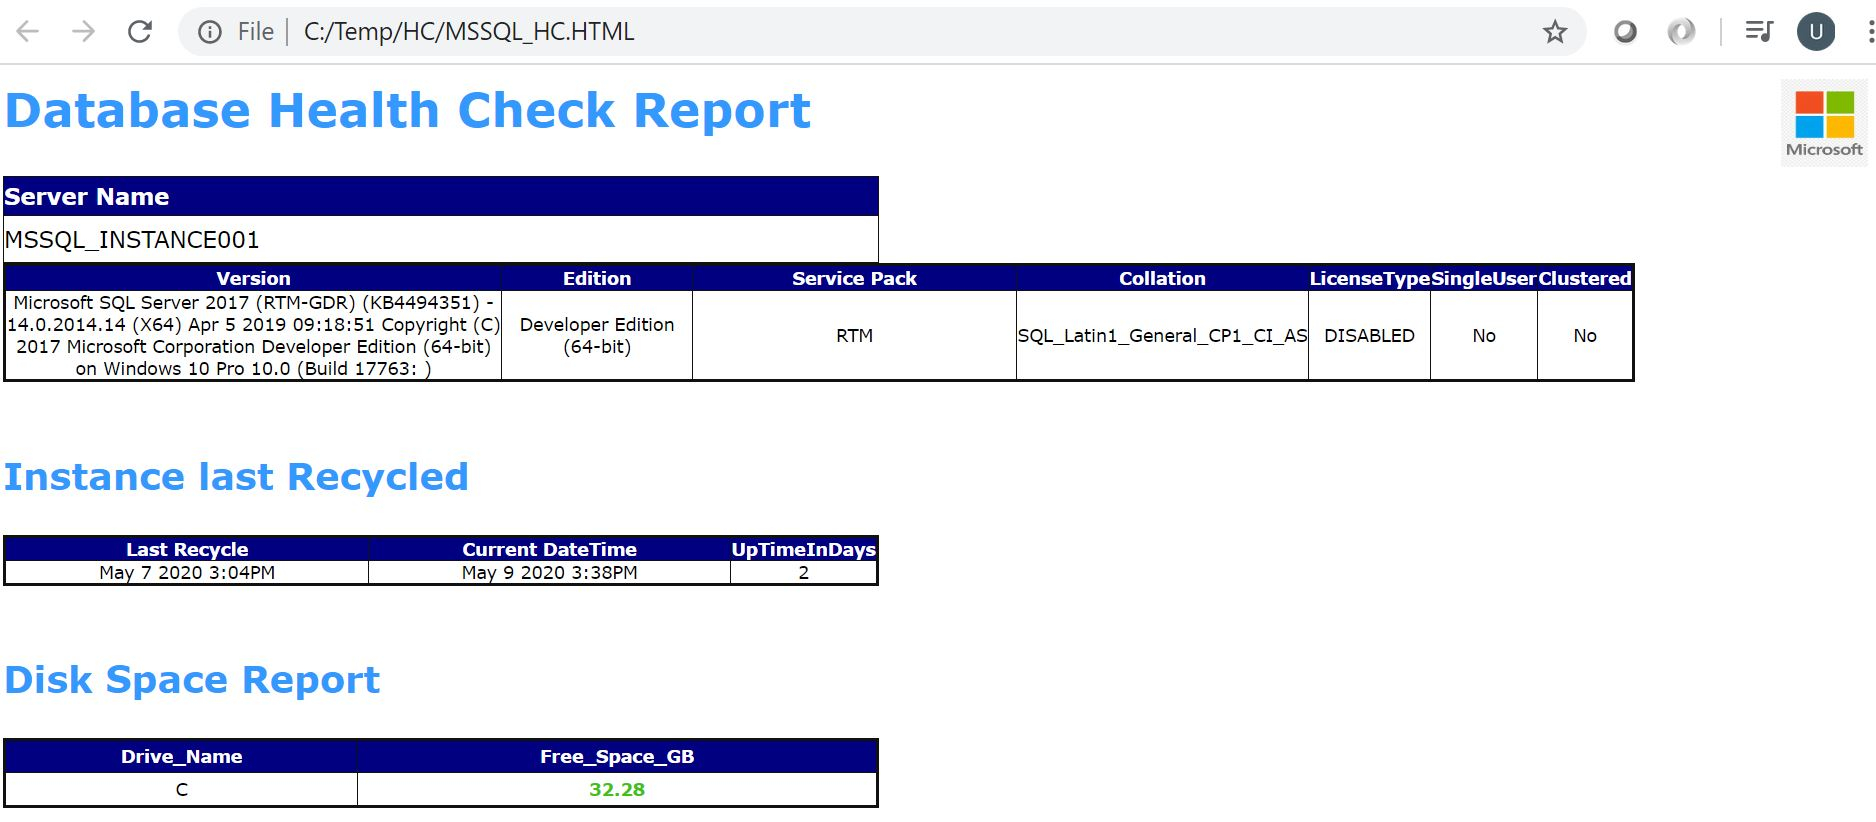 SQL Server Health Check HTML Report - udayarumilli